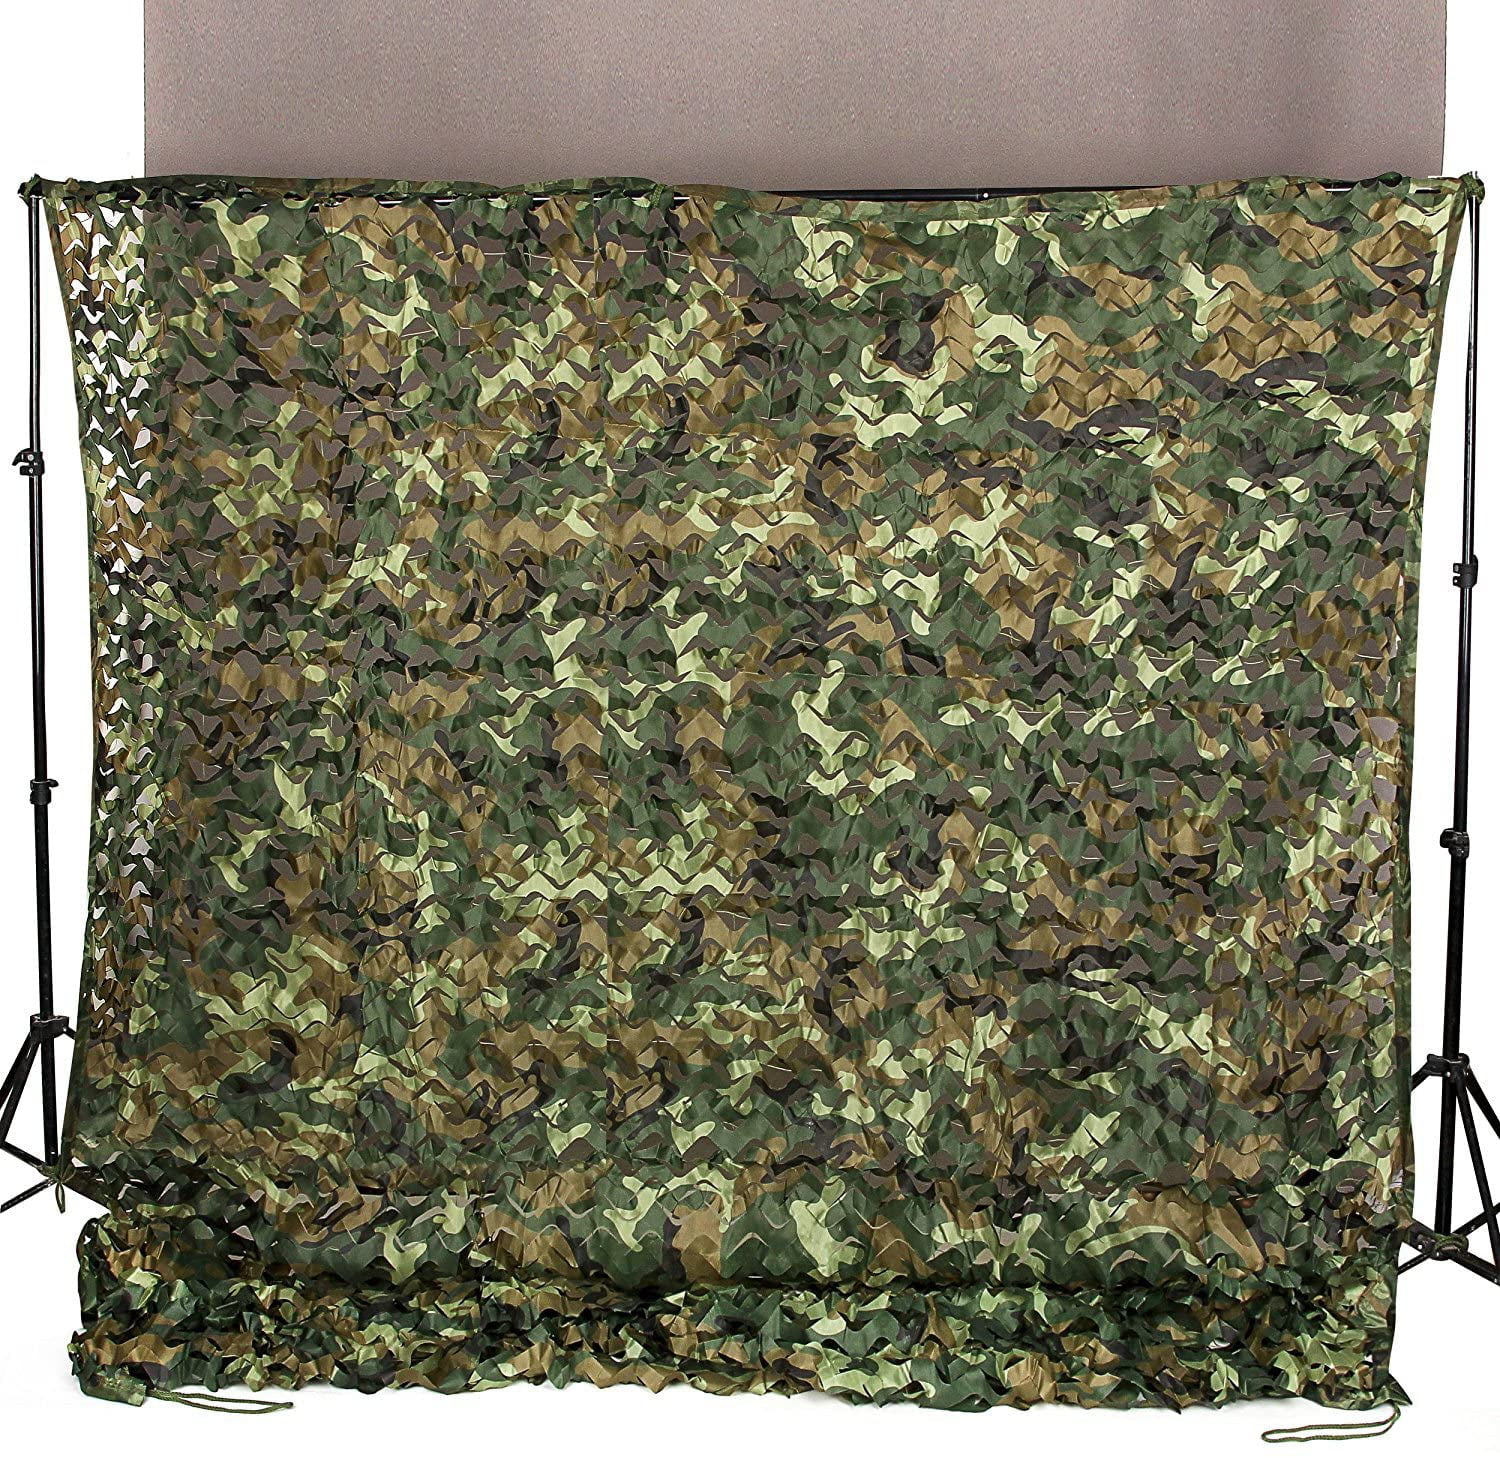 DESERT BRUSH Camouflage Netting Military Camo Hunt Shooting Cover Net 10 x 16 